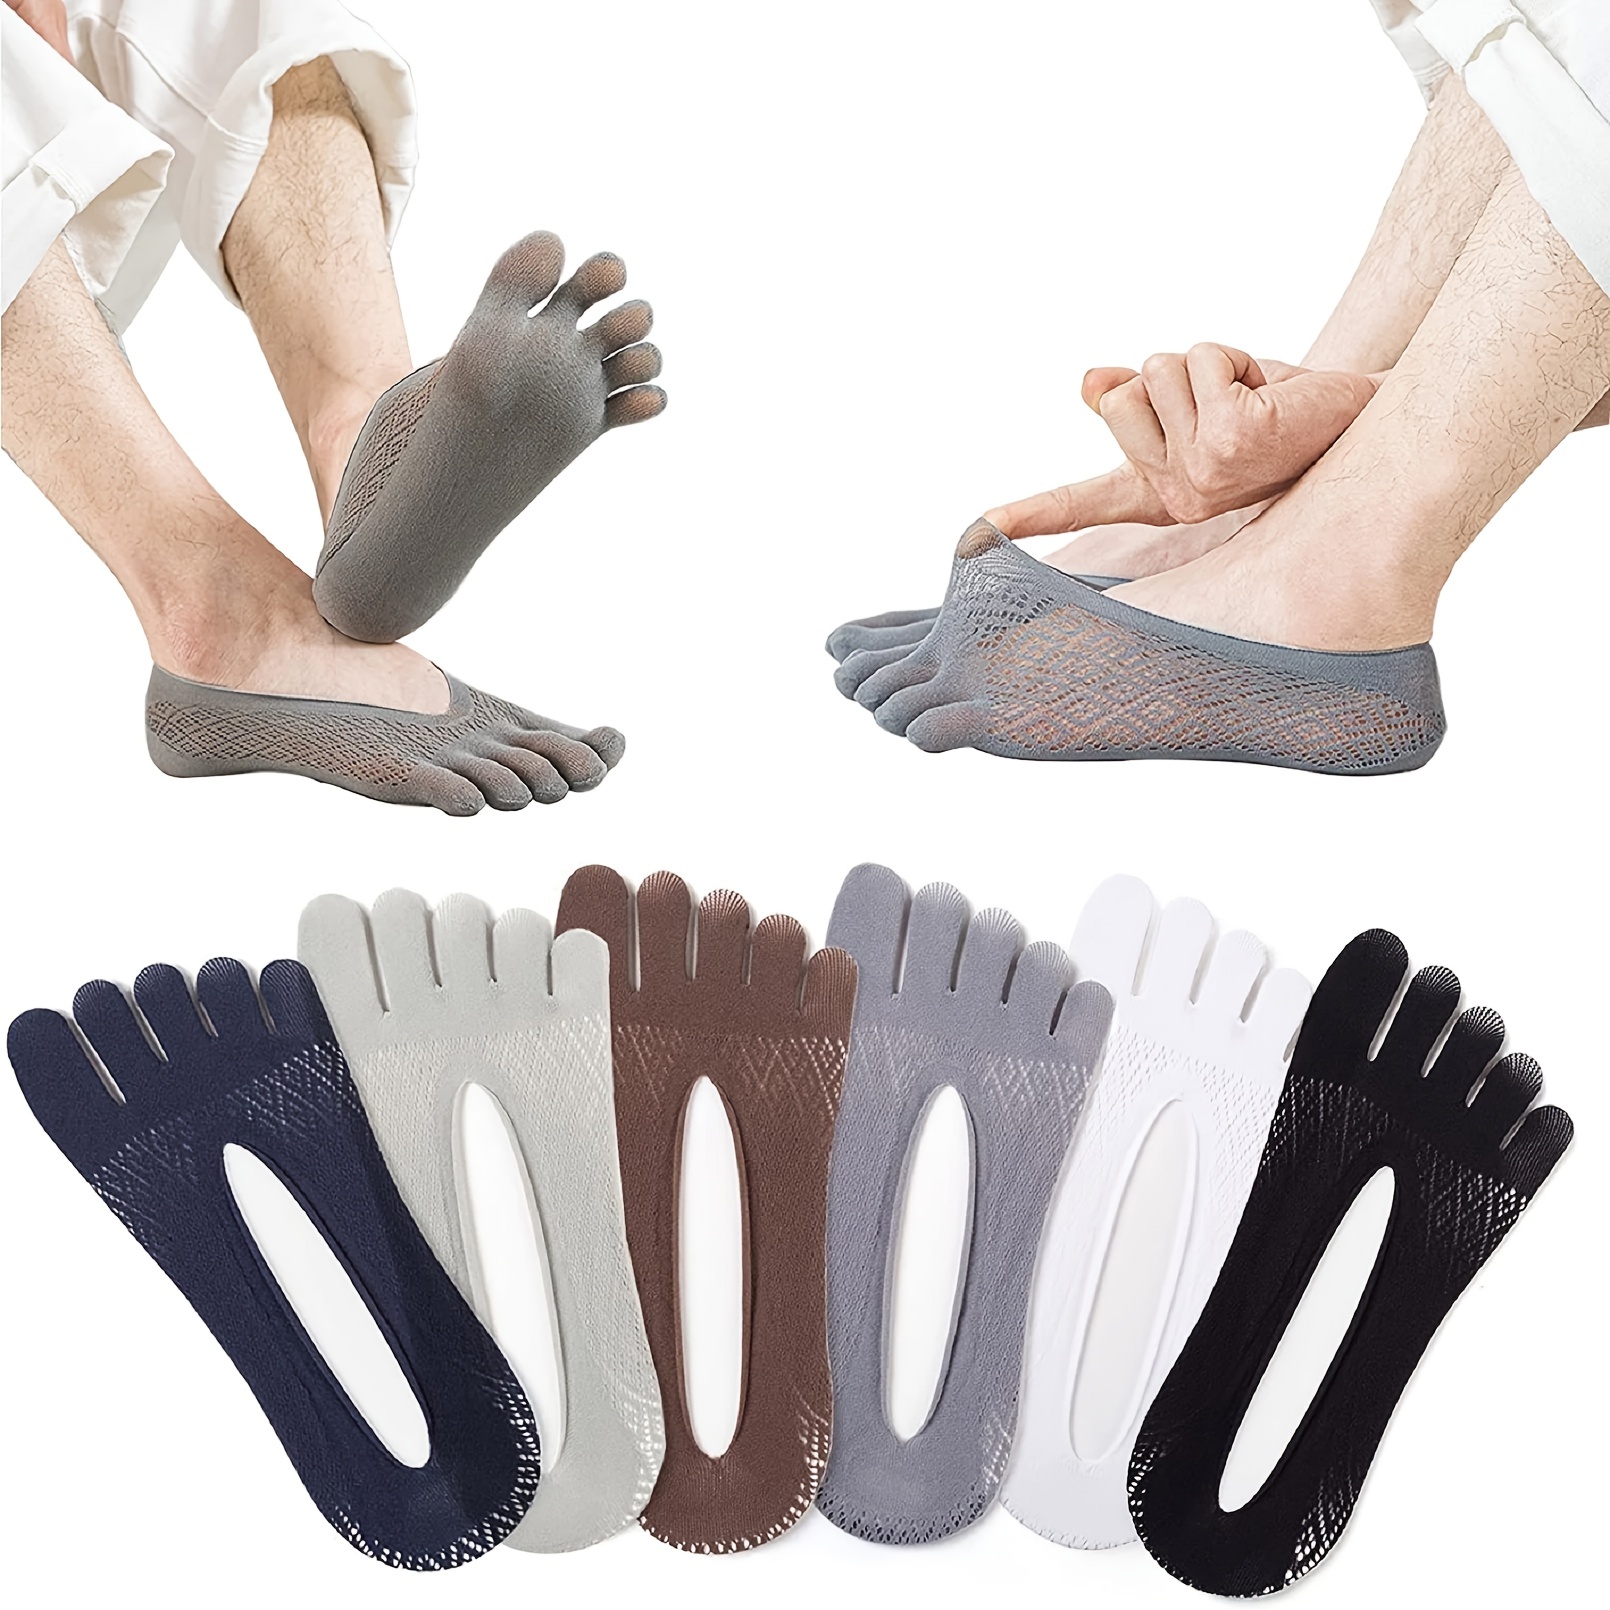 Five Fingers Yoga Socks Silicone Anti-slip Cotton Pilates Socks